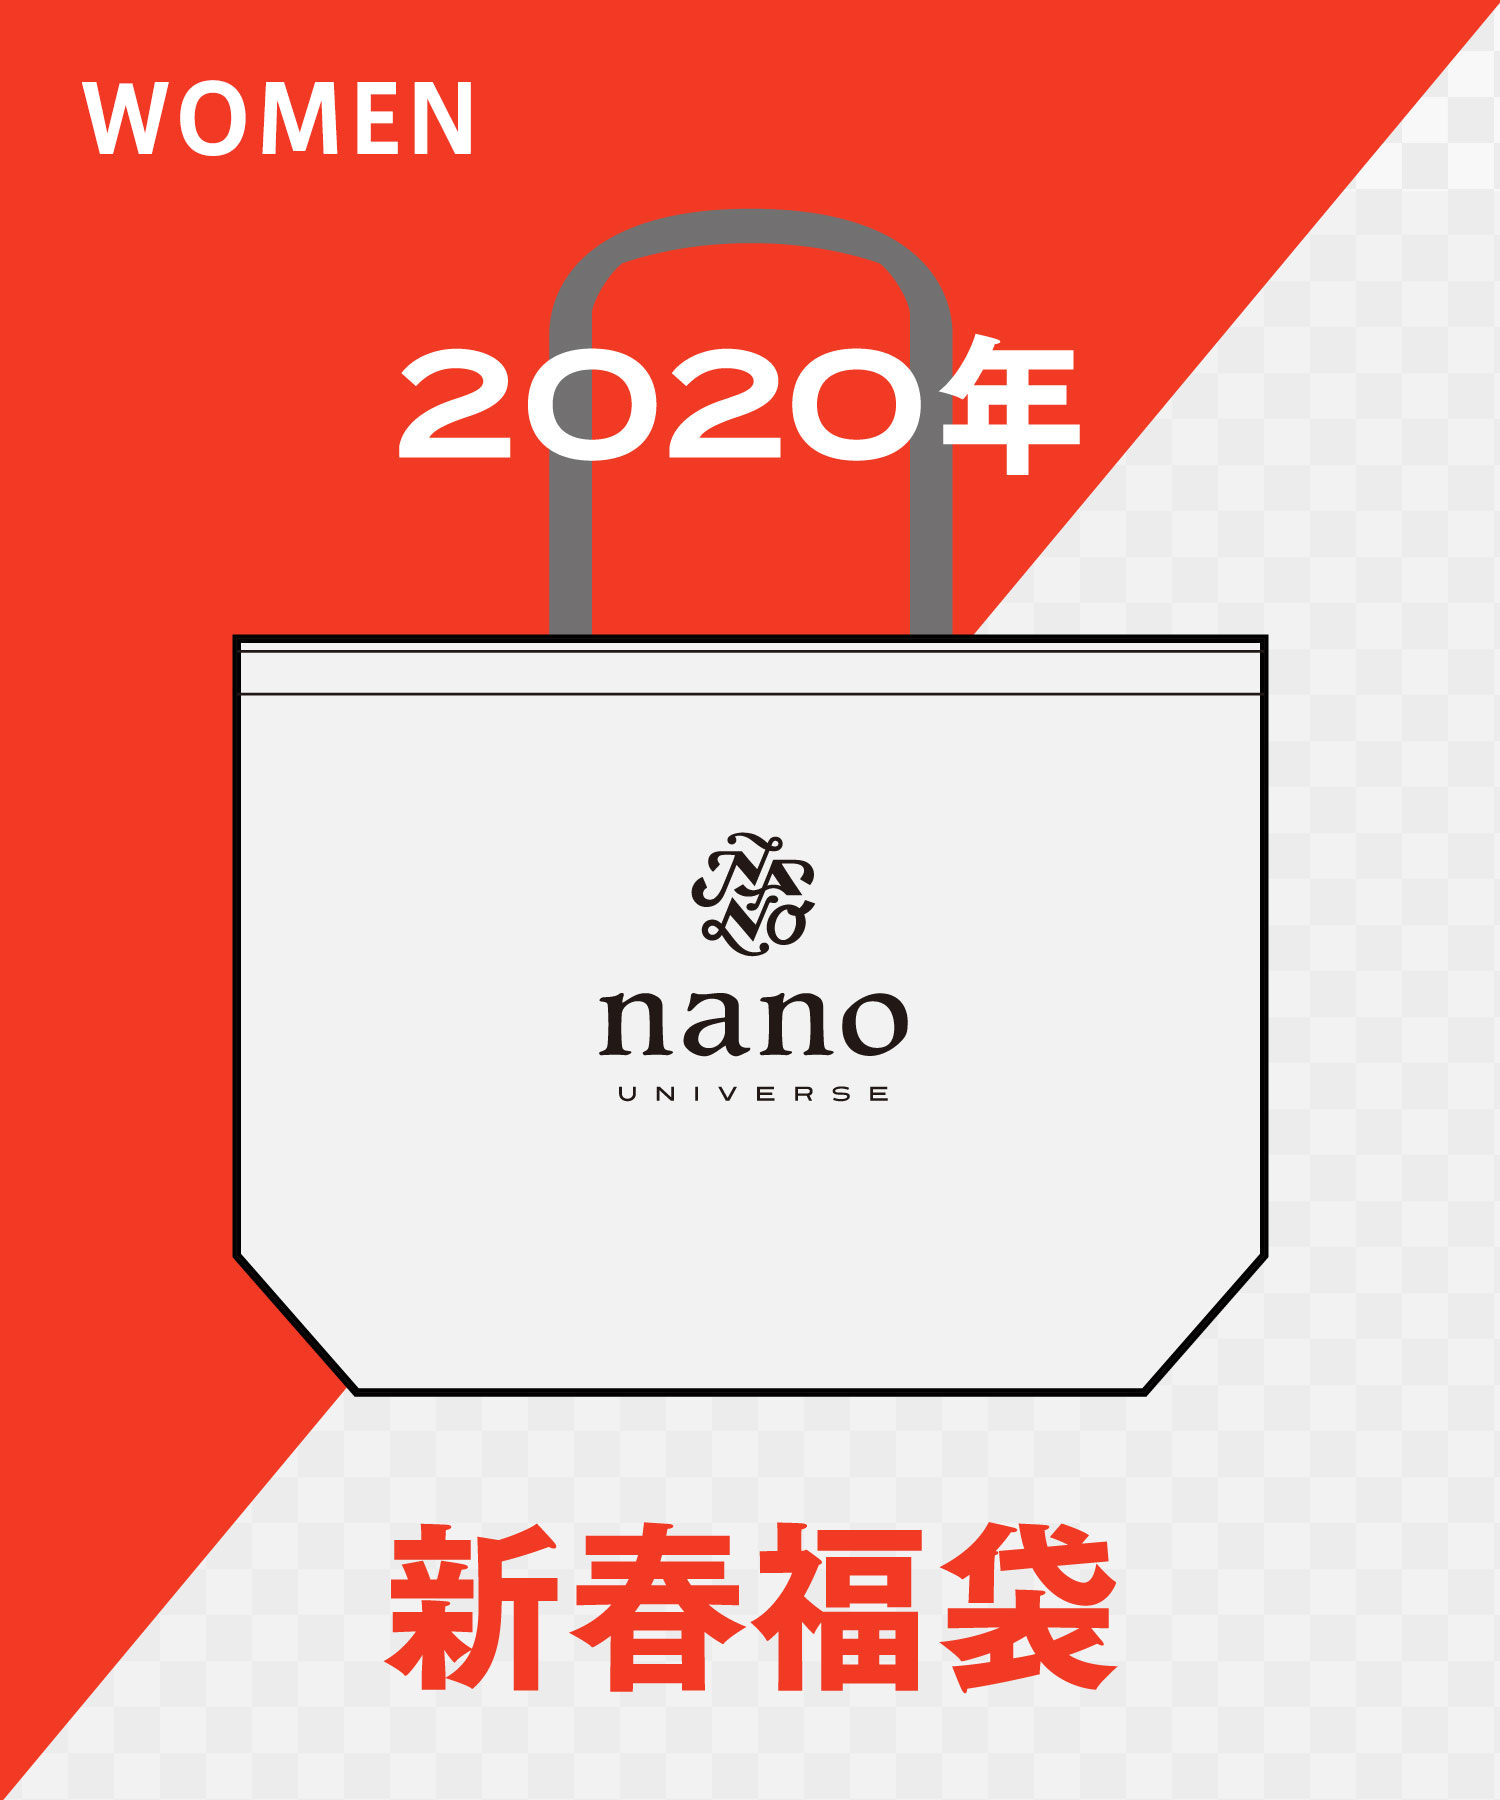 【2020年福袋】nano・universe